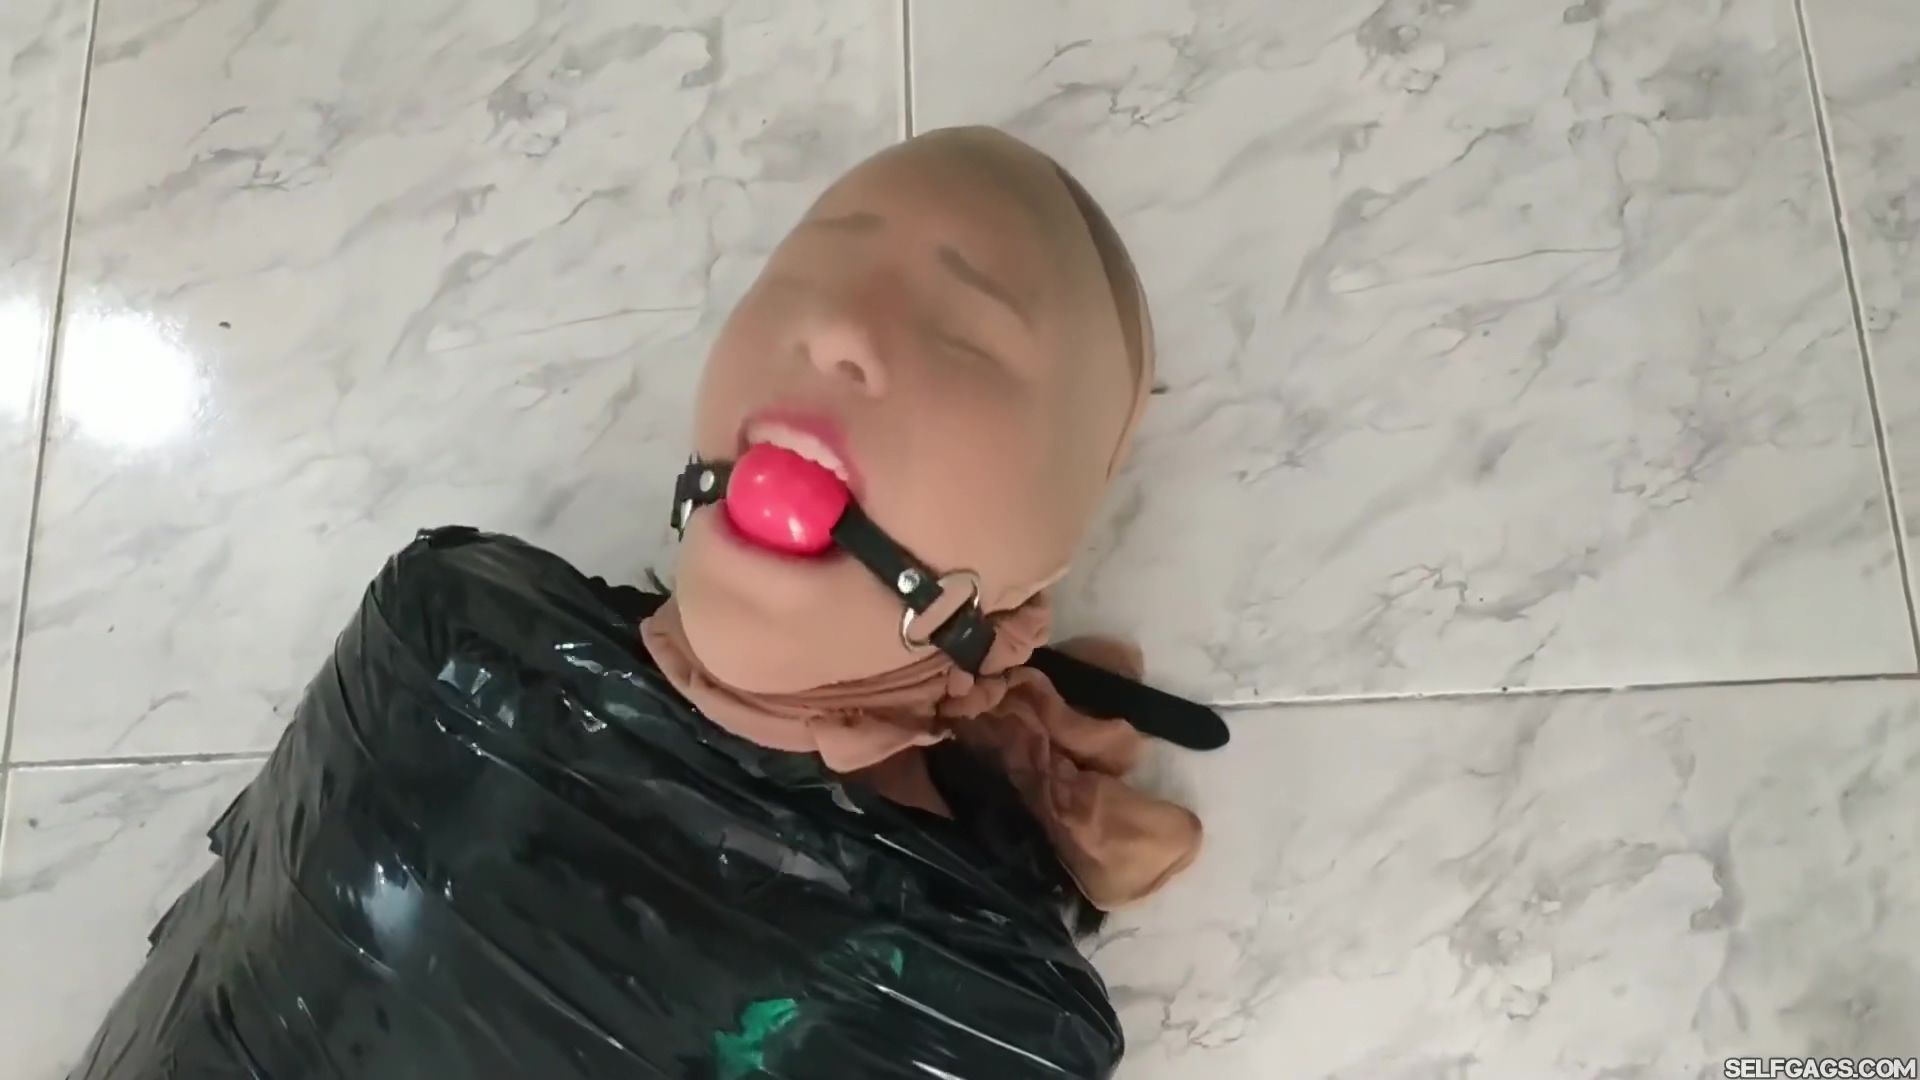 Fist Tape Mummified Girl Pantyhose Hooded And Ball Gagged Web Cam - 1